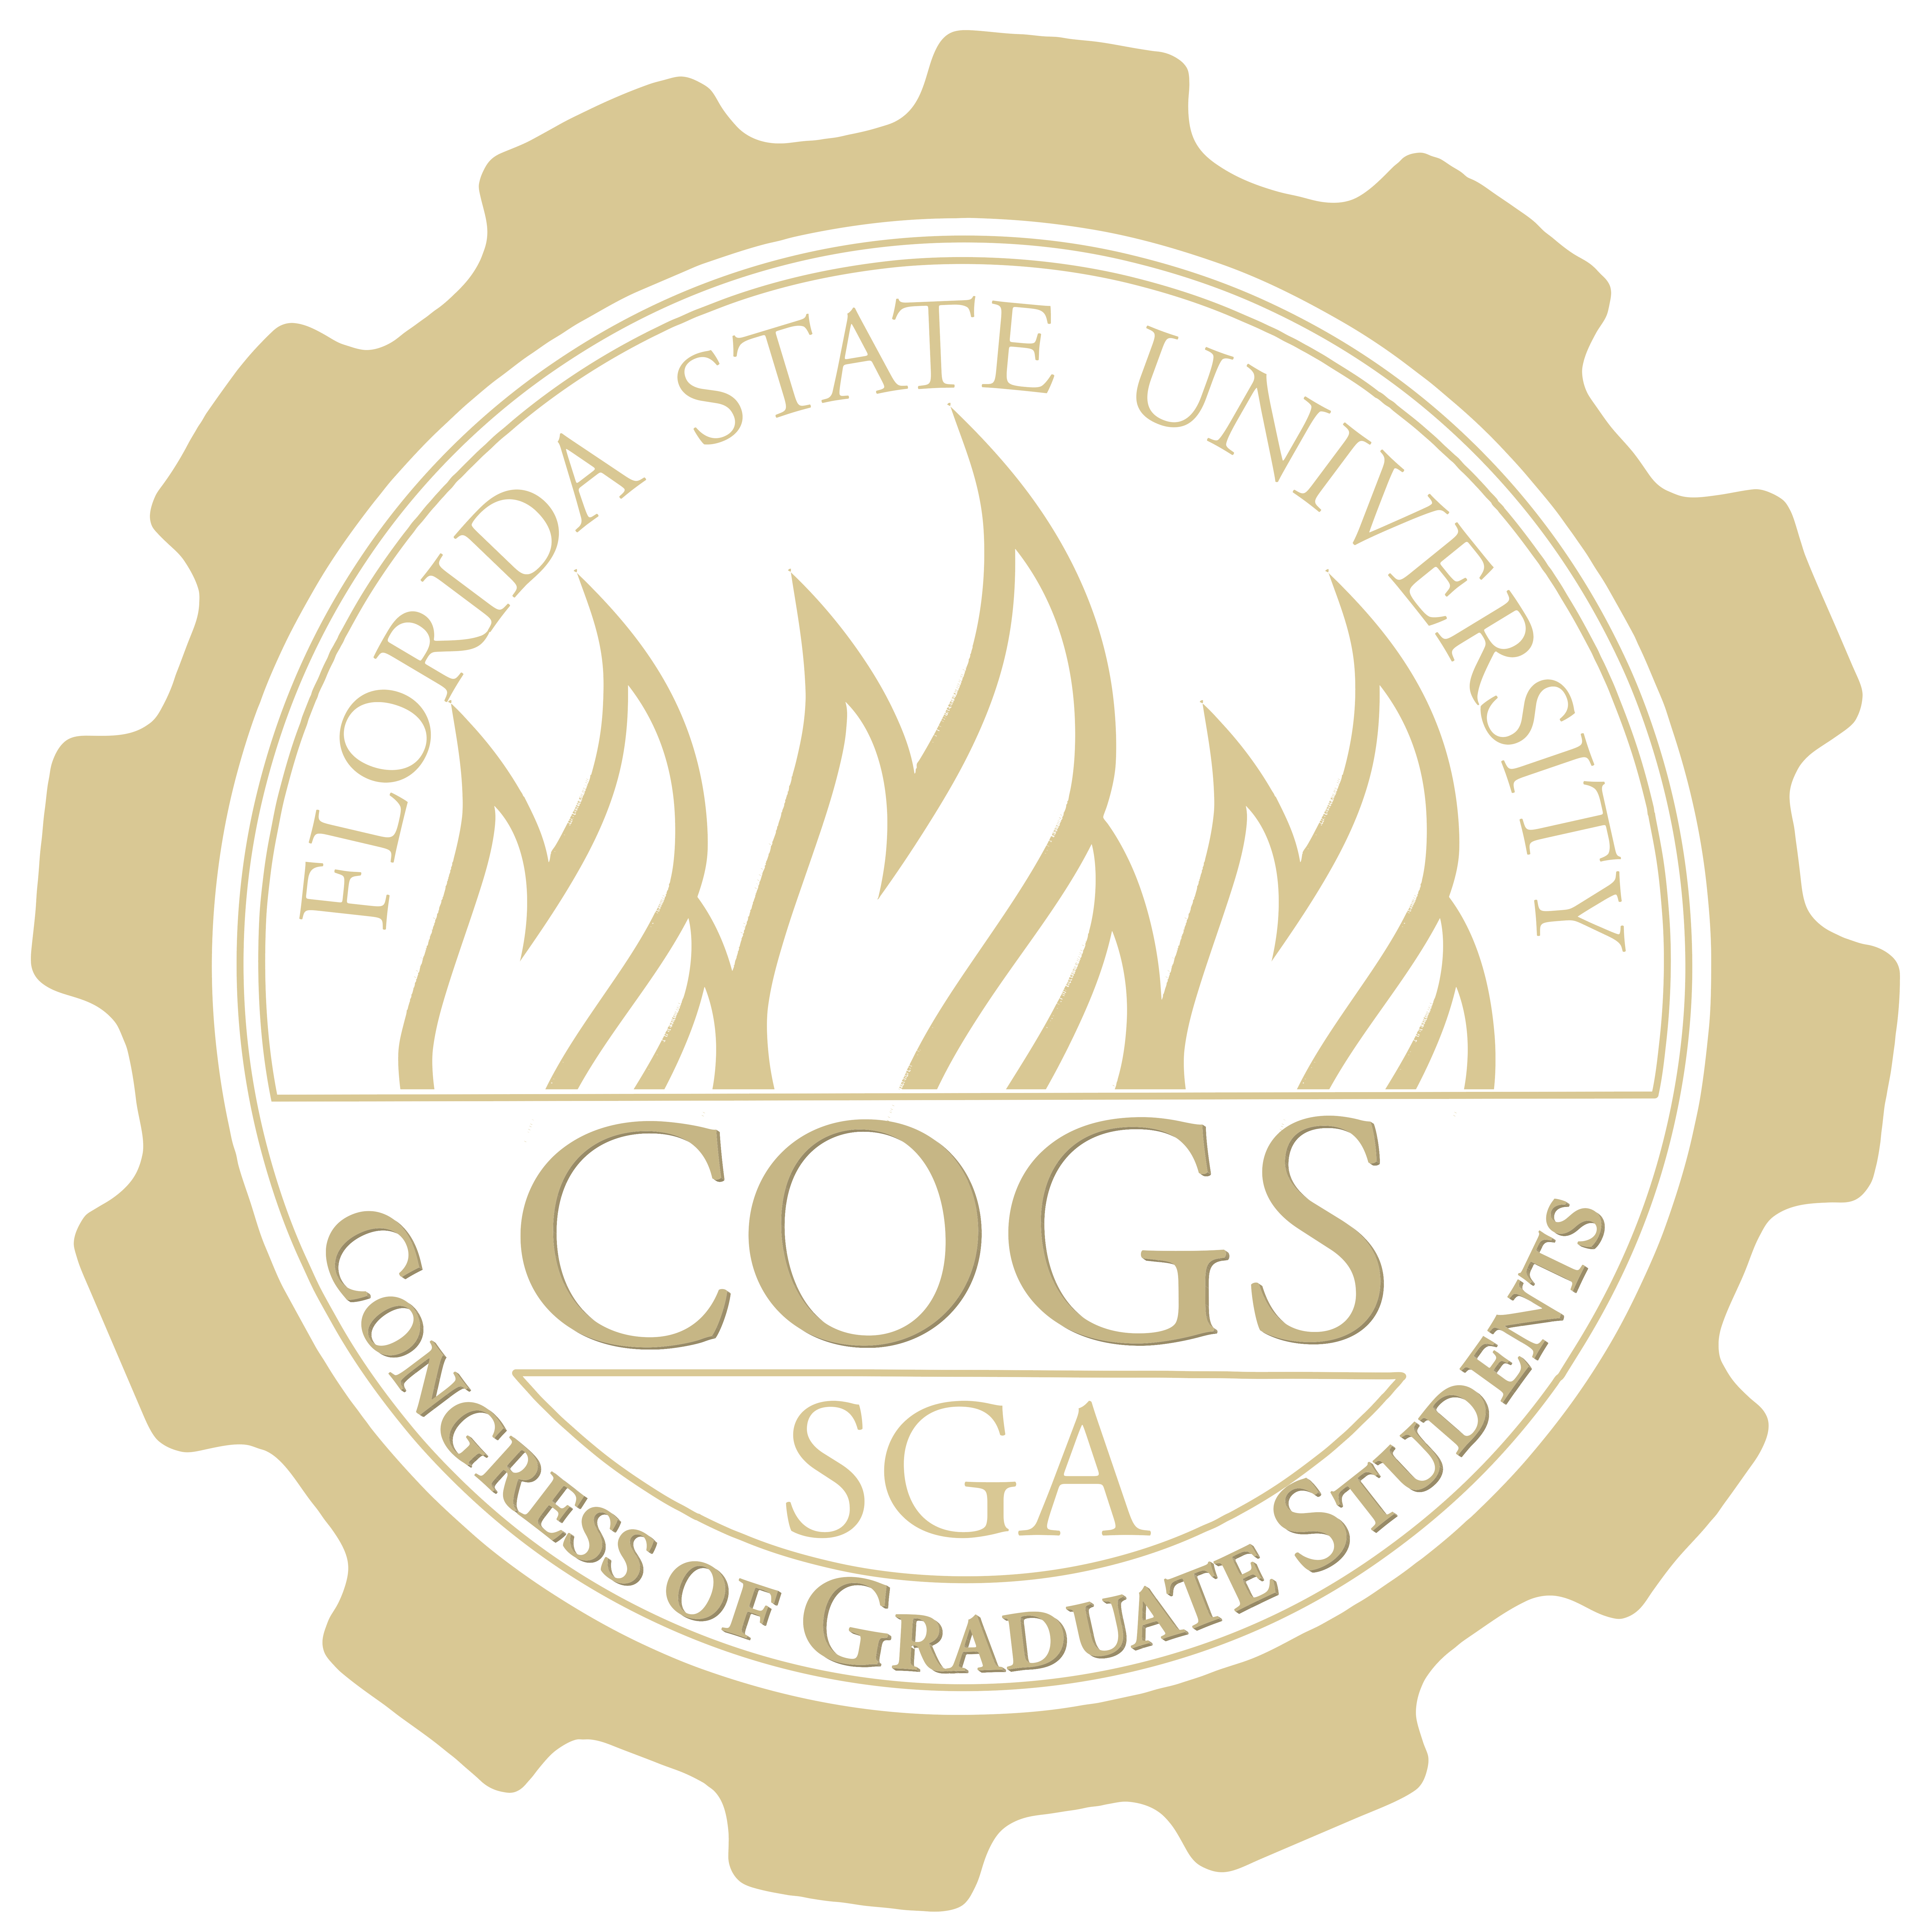 Congress of Graduate Students logo